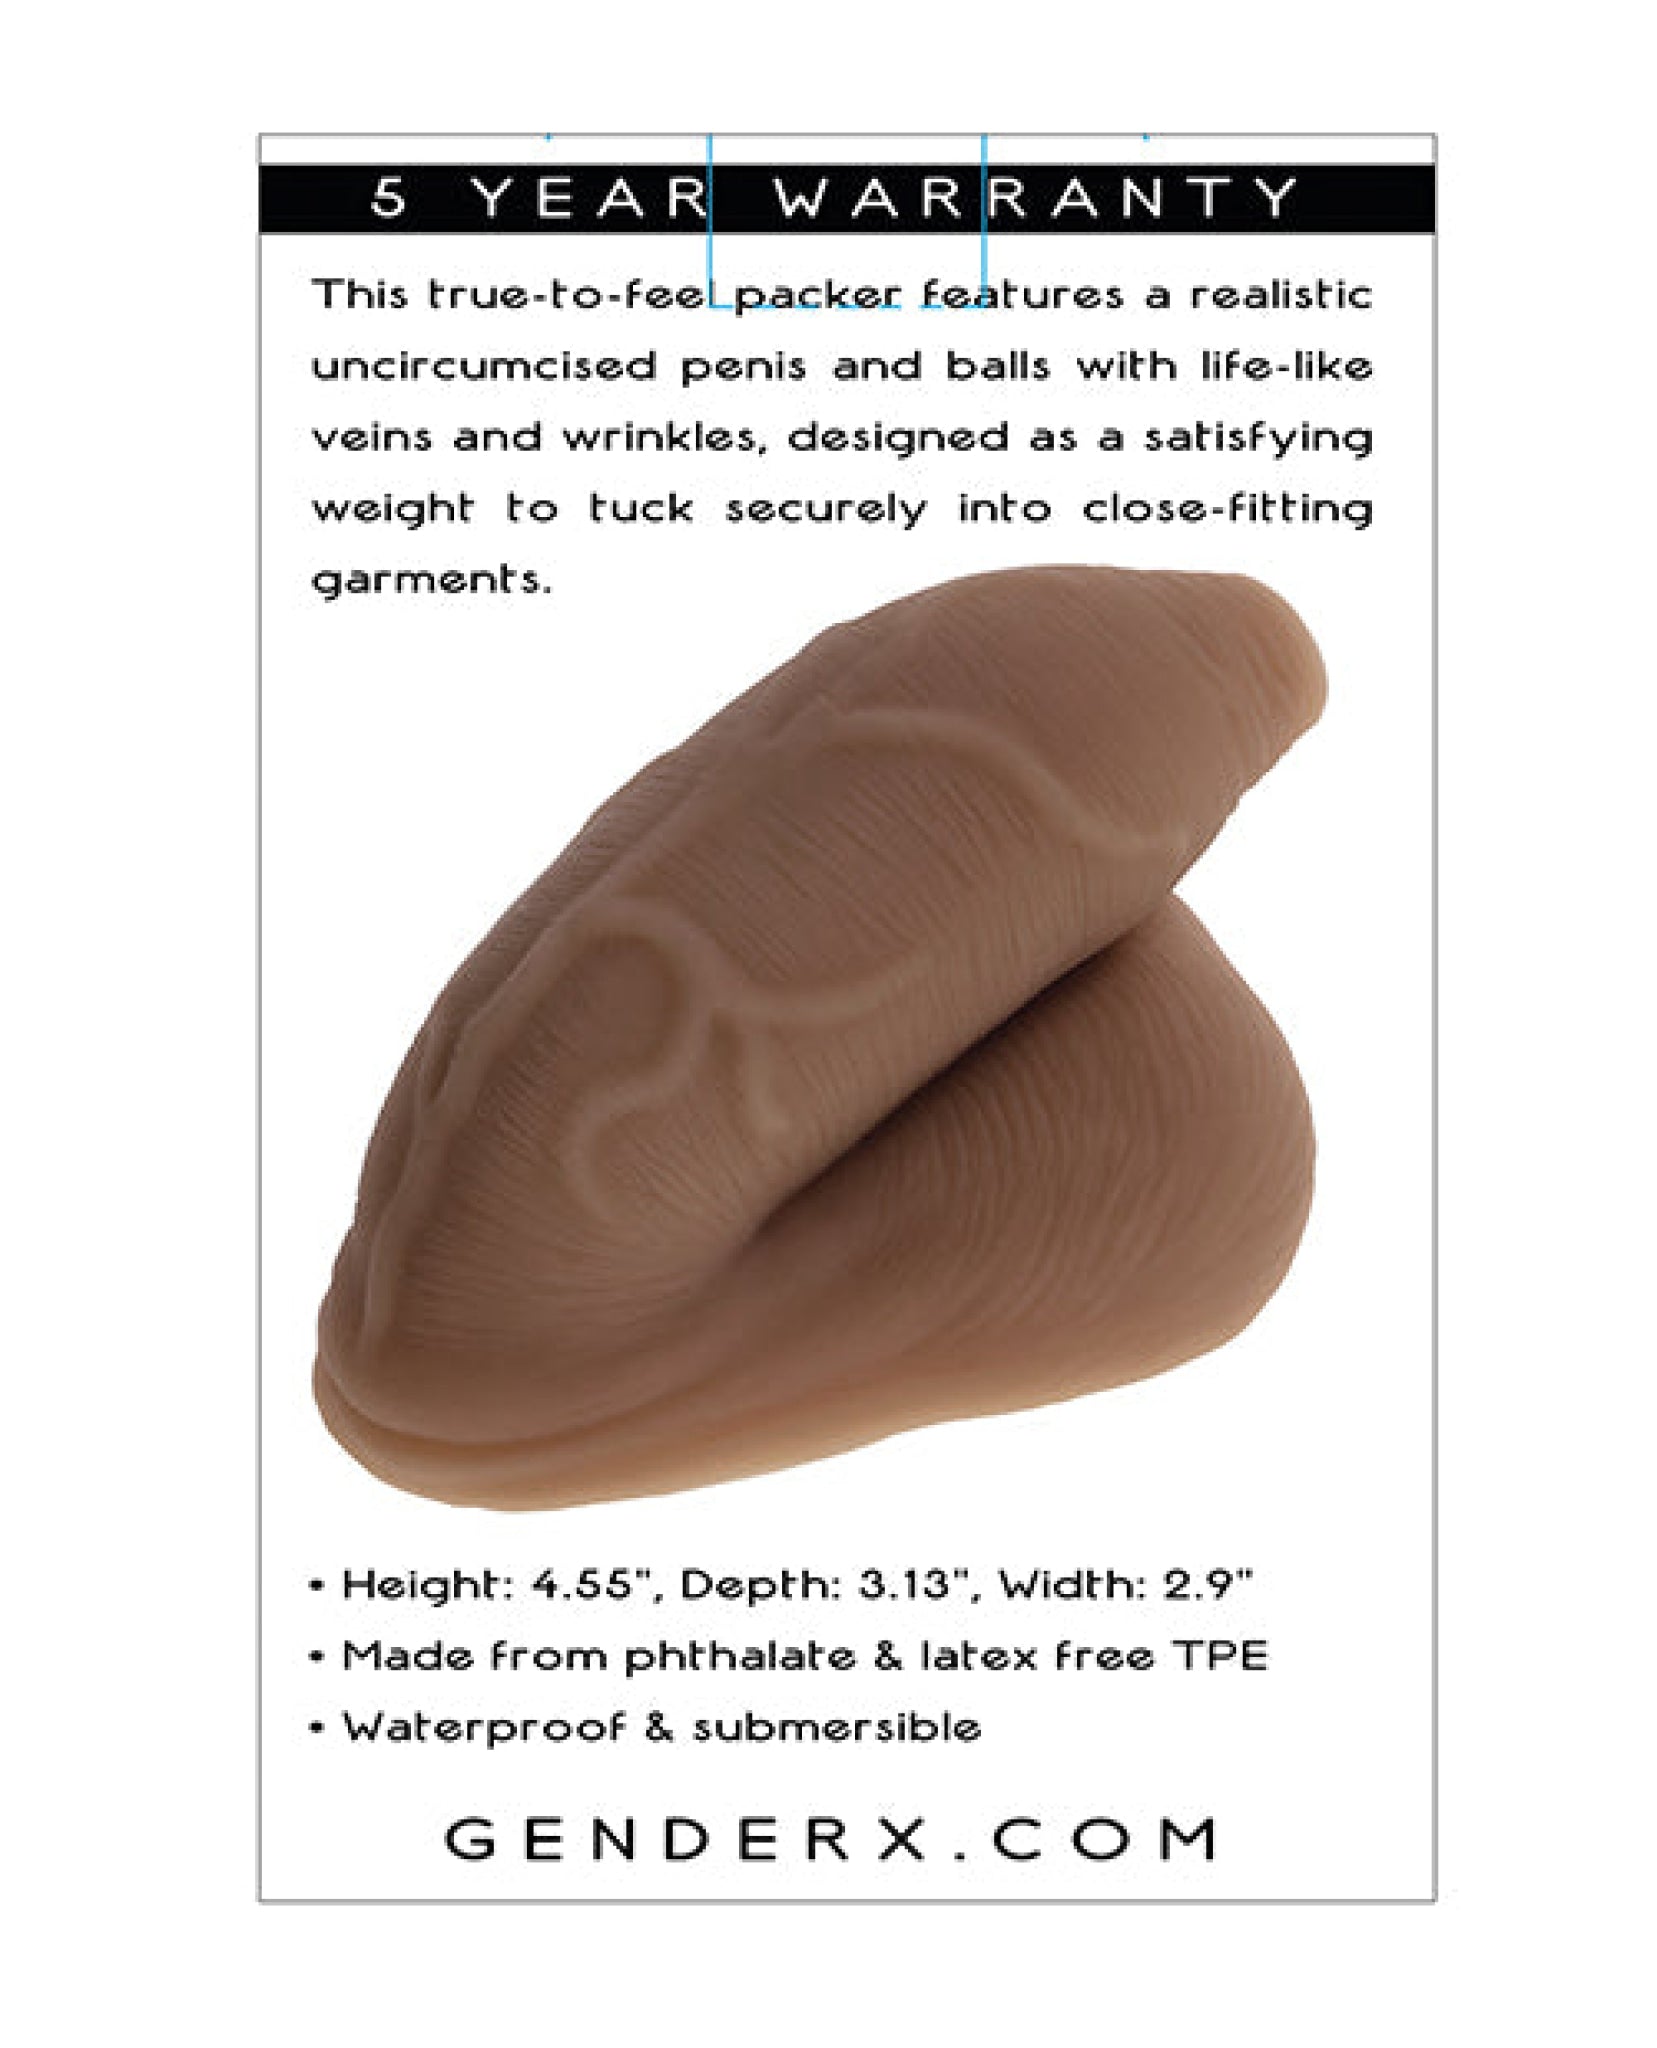 Gender X The Uncircumcised Packer - Dark Evolved Novelties INC